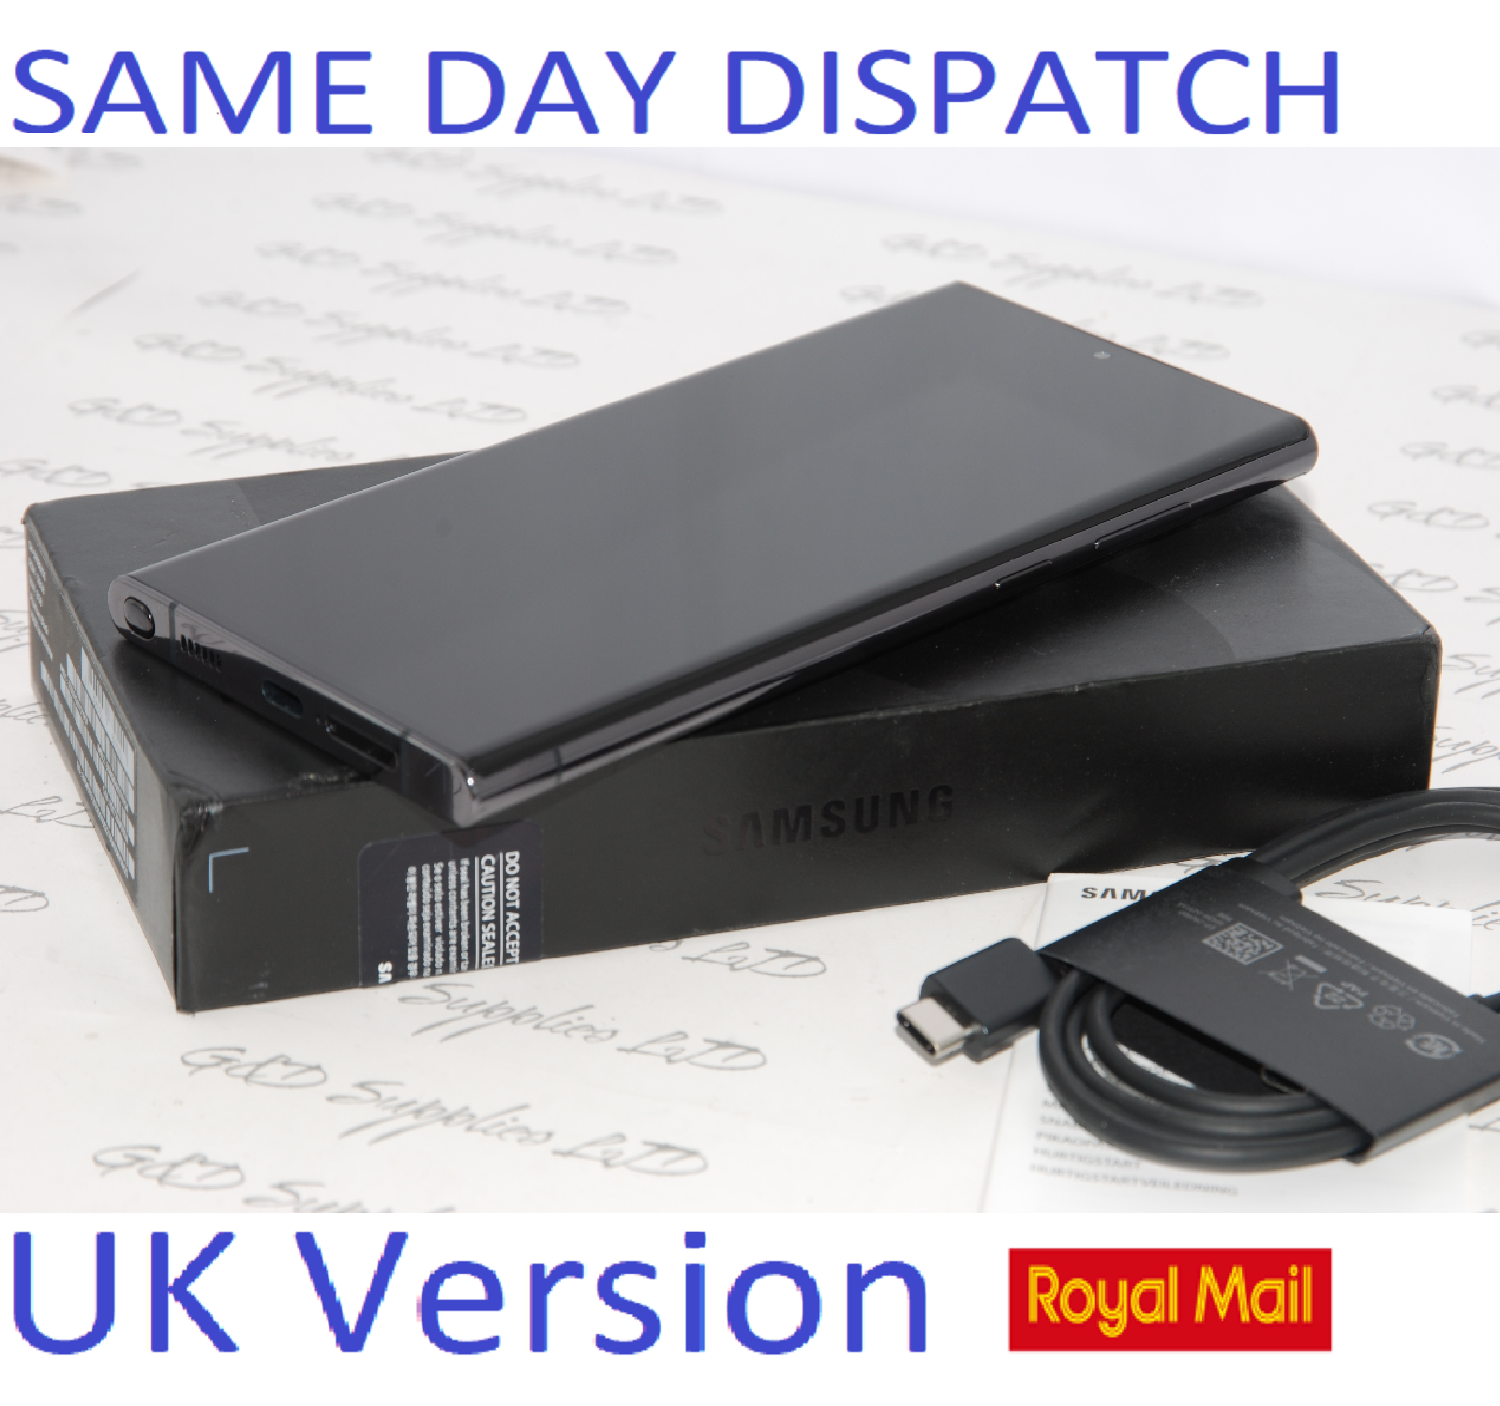 # Samsung Galaxy S22 Ultra 5G 128GB unlocked Dual Sim Black UK Version